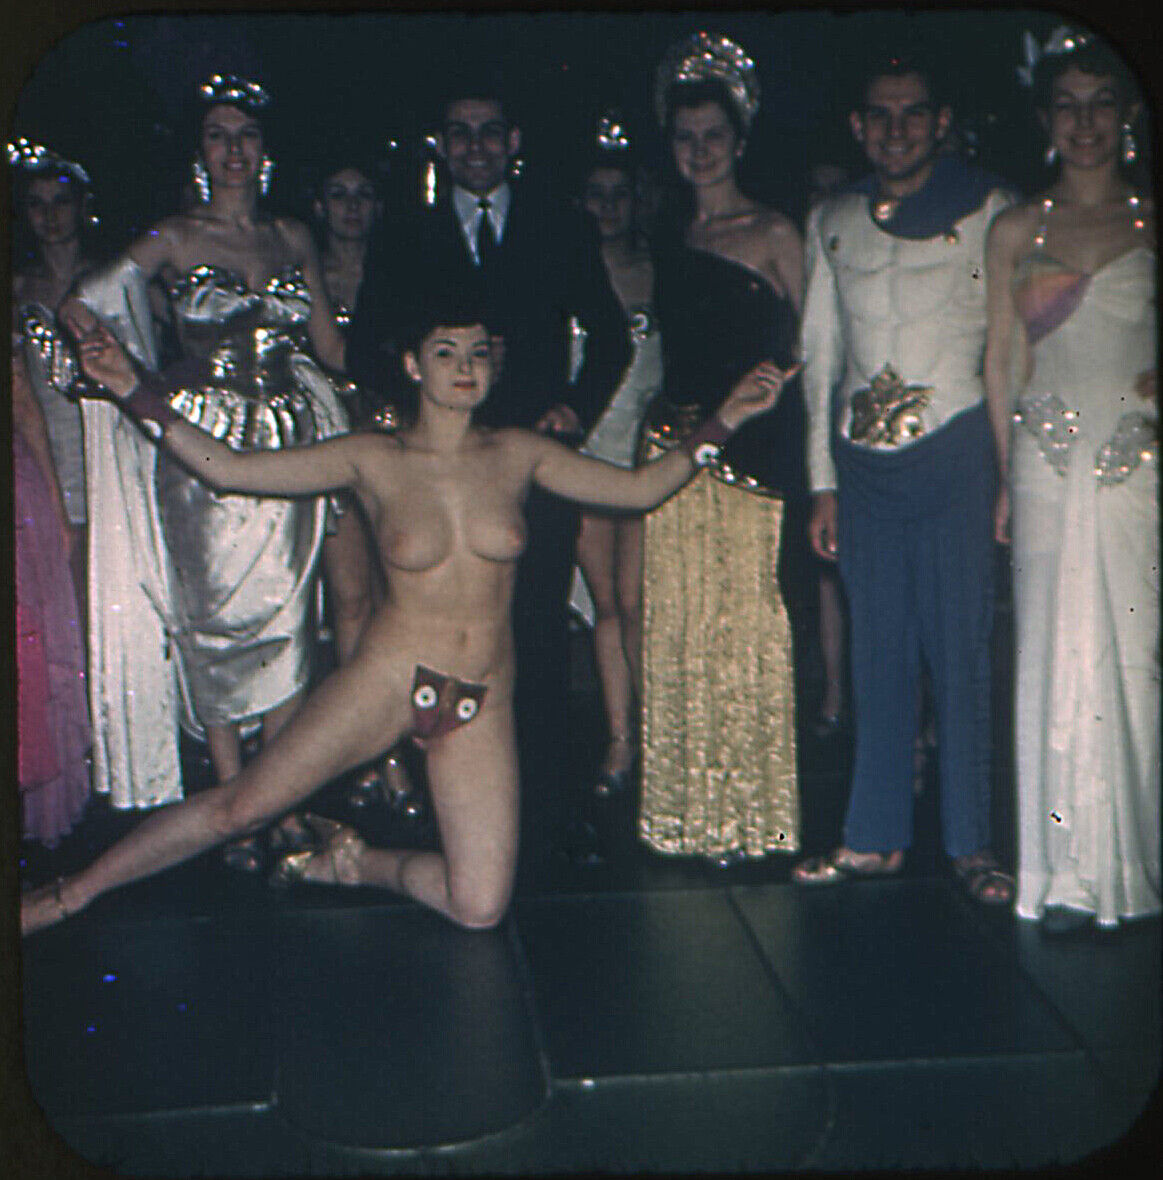 2 Colorelief Risque Cards - Montmartre Cabaret "Eve" 1950s Nude Stars - 16 image Без бренда - фотография #4